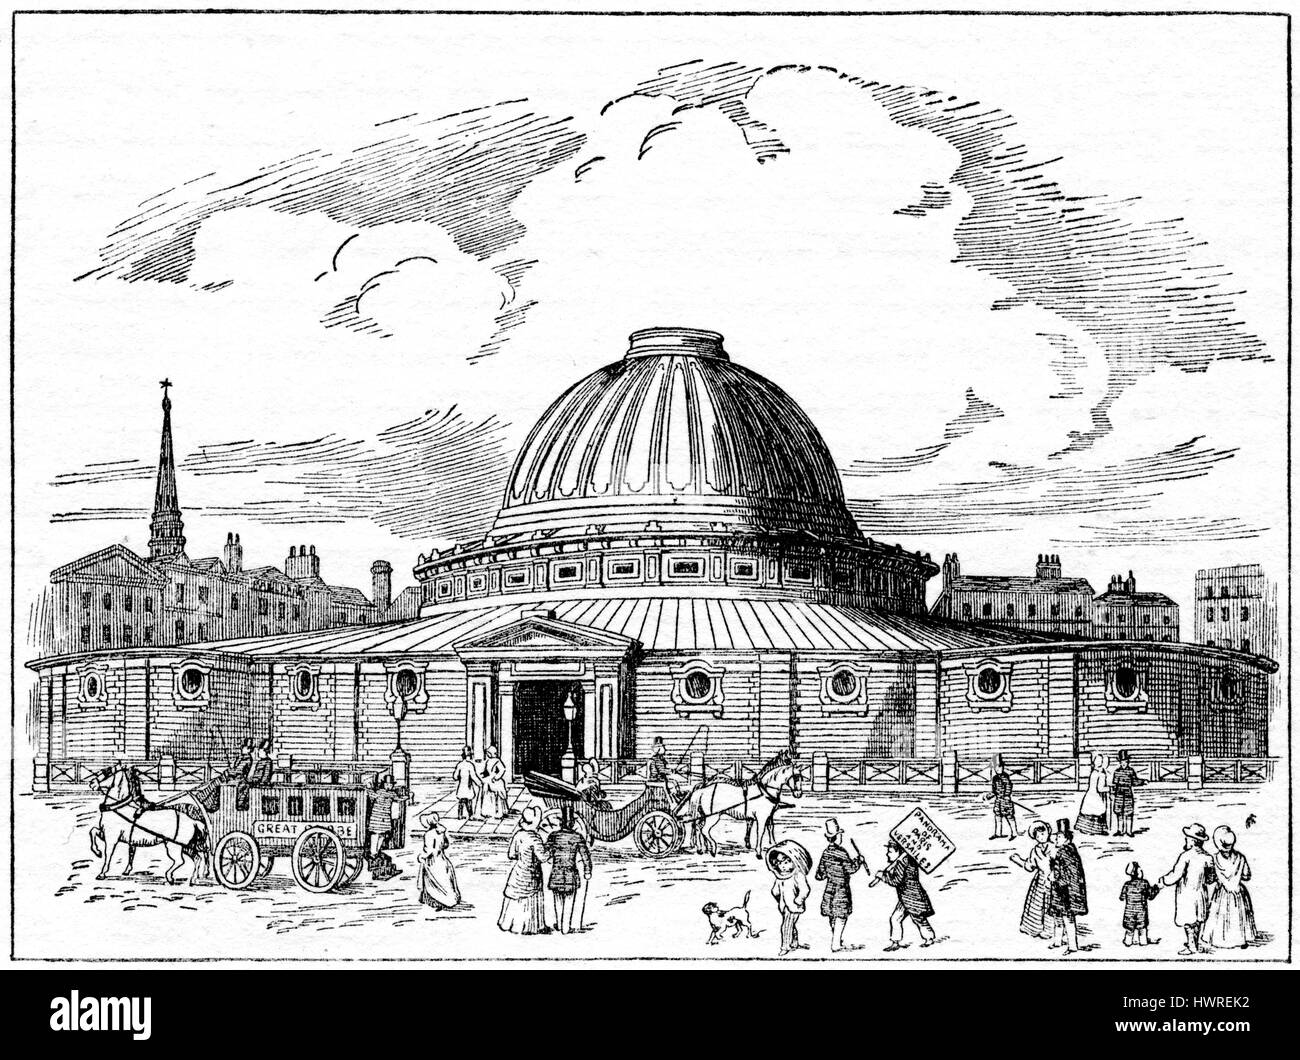 Wyld des Great Globe, Attraktion am Leicester Square 1851-1862, London, 19. Jahrhundert Stockfoto